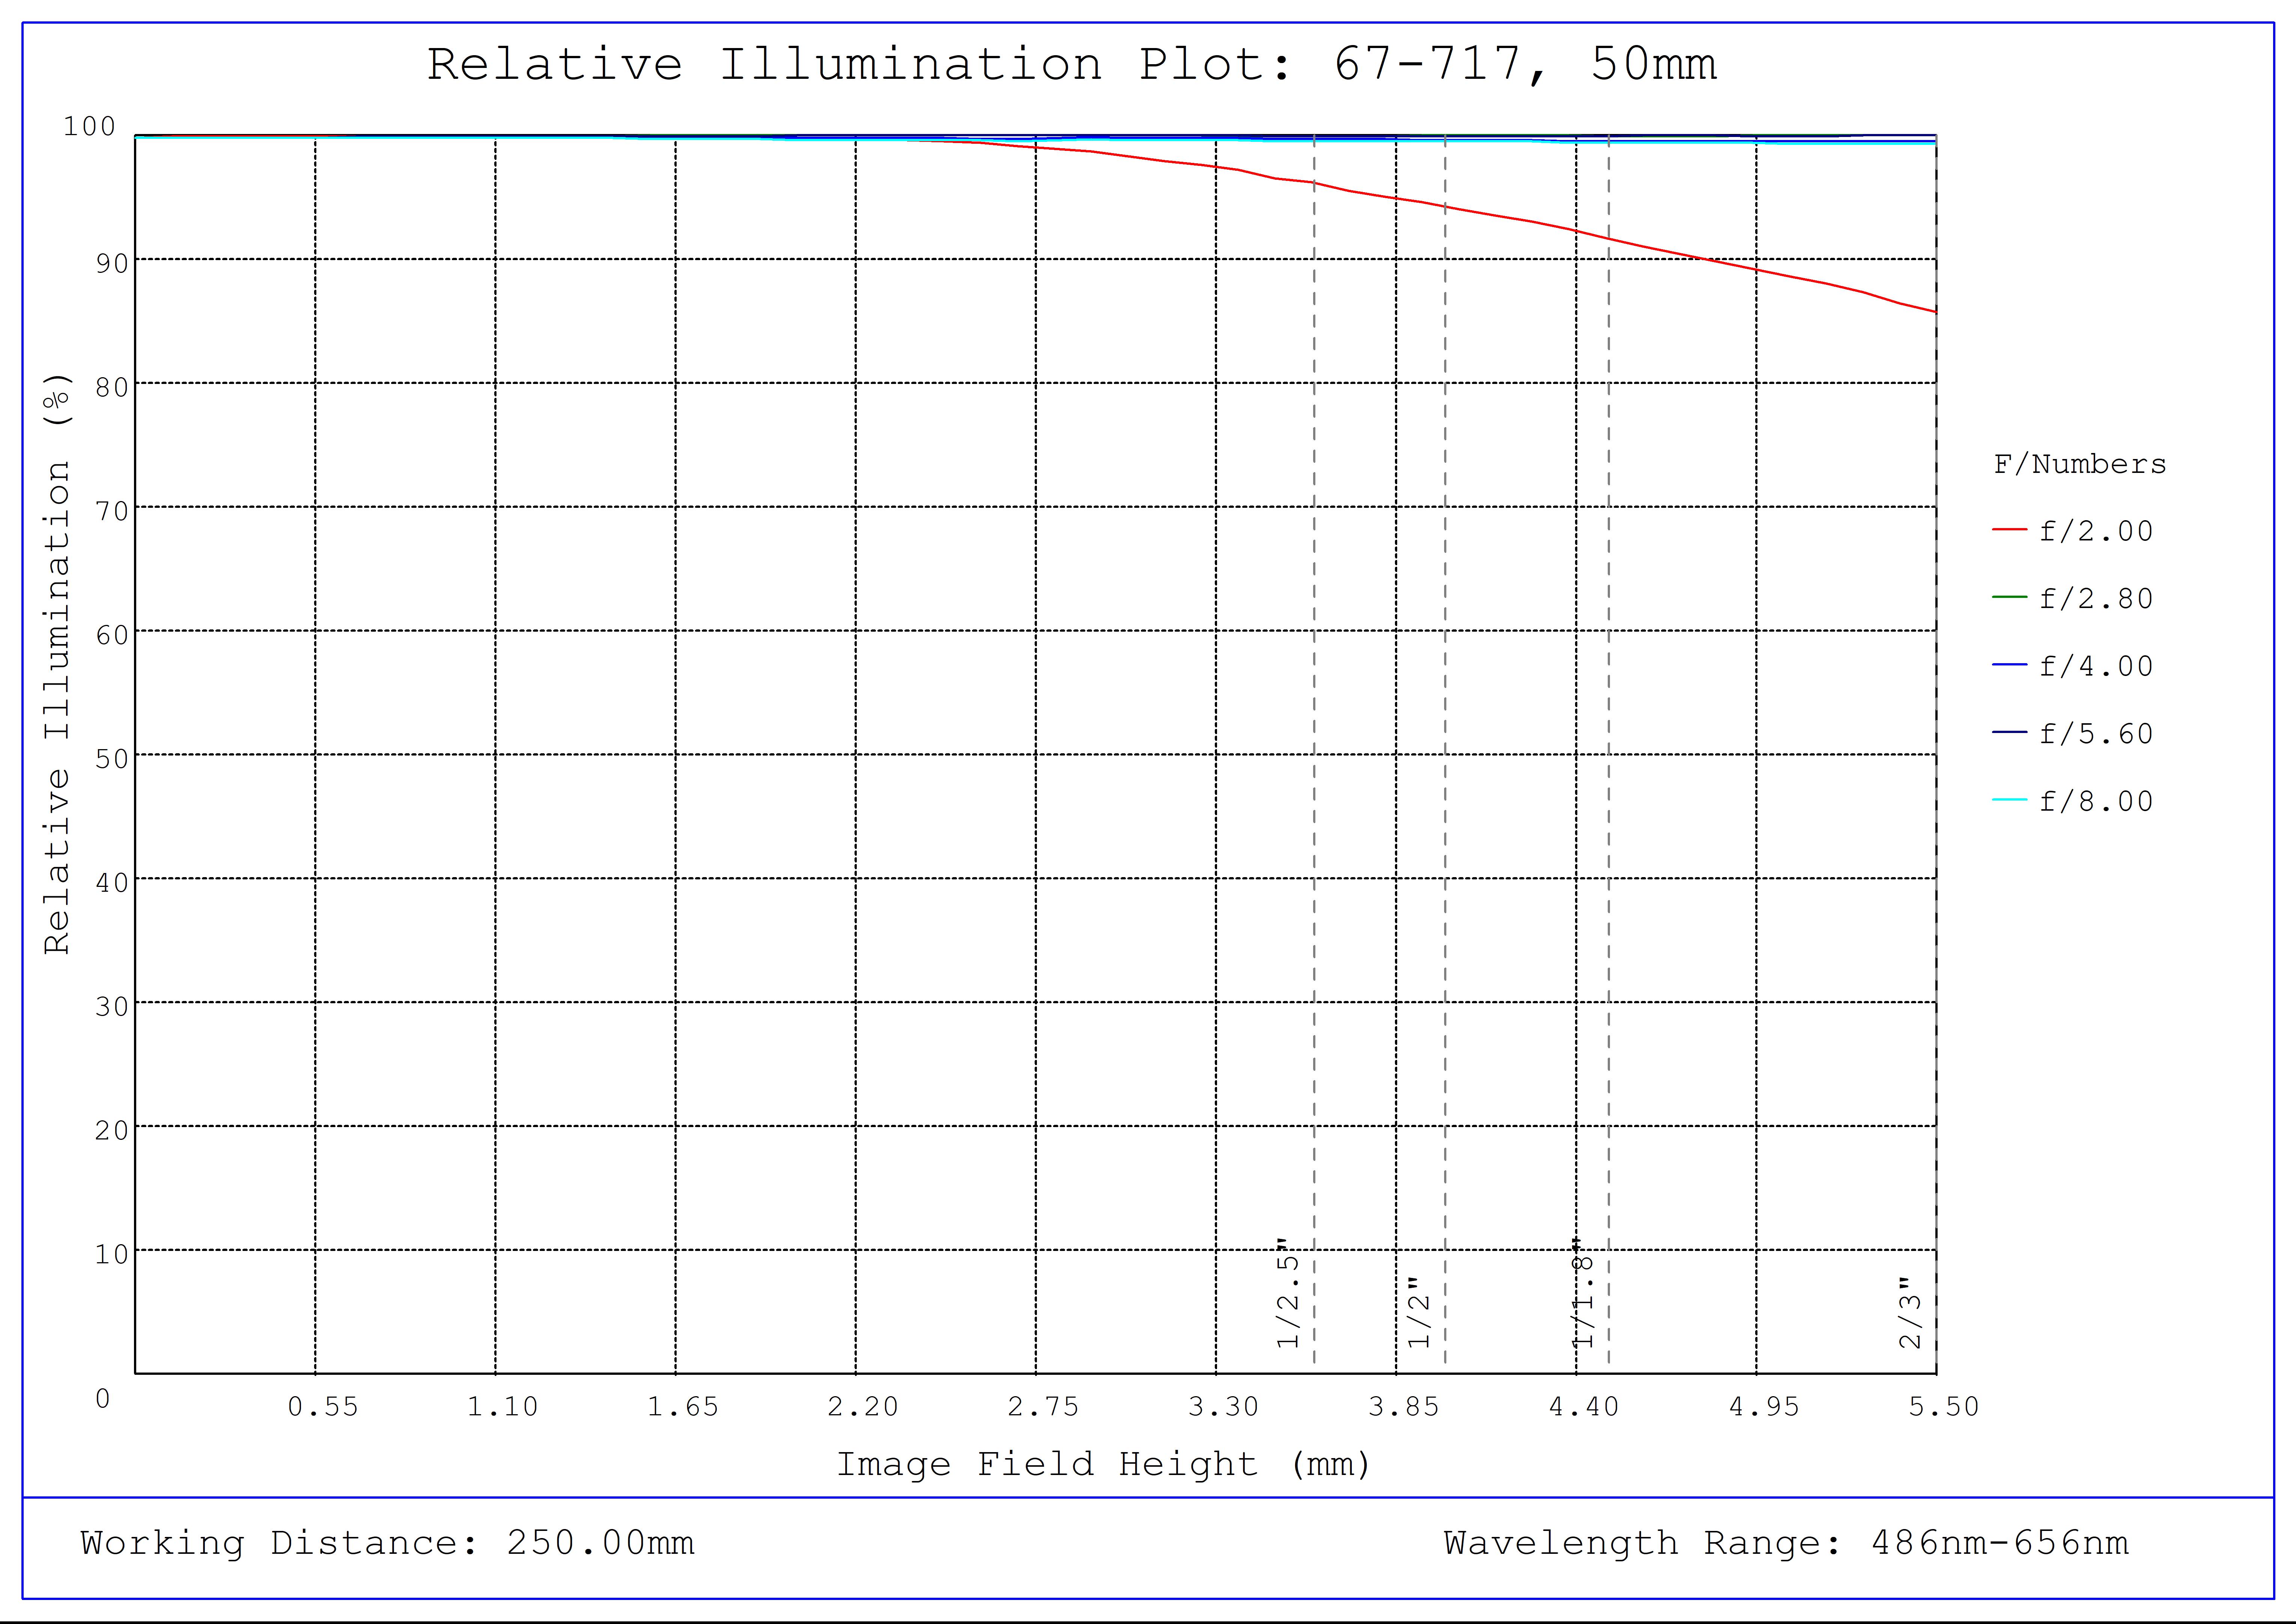 #67-717, 50mm C VIS-NIR Series Fixed Focal Length Lens, Relative Illumination Plot